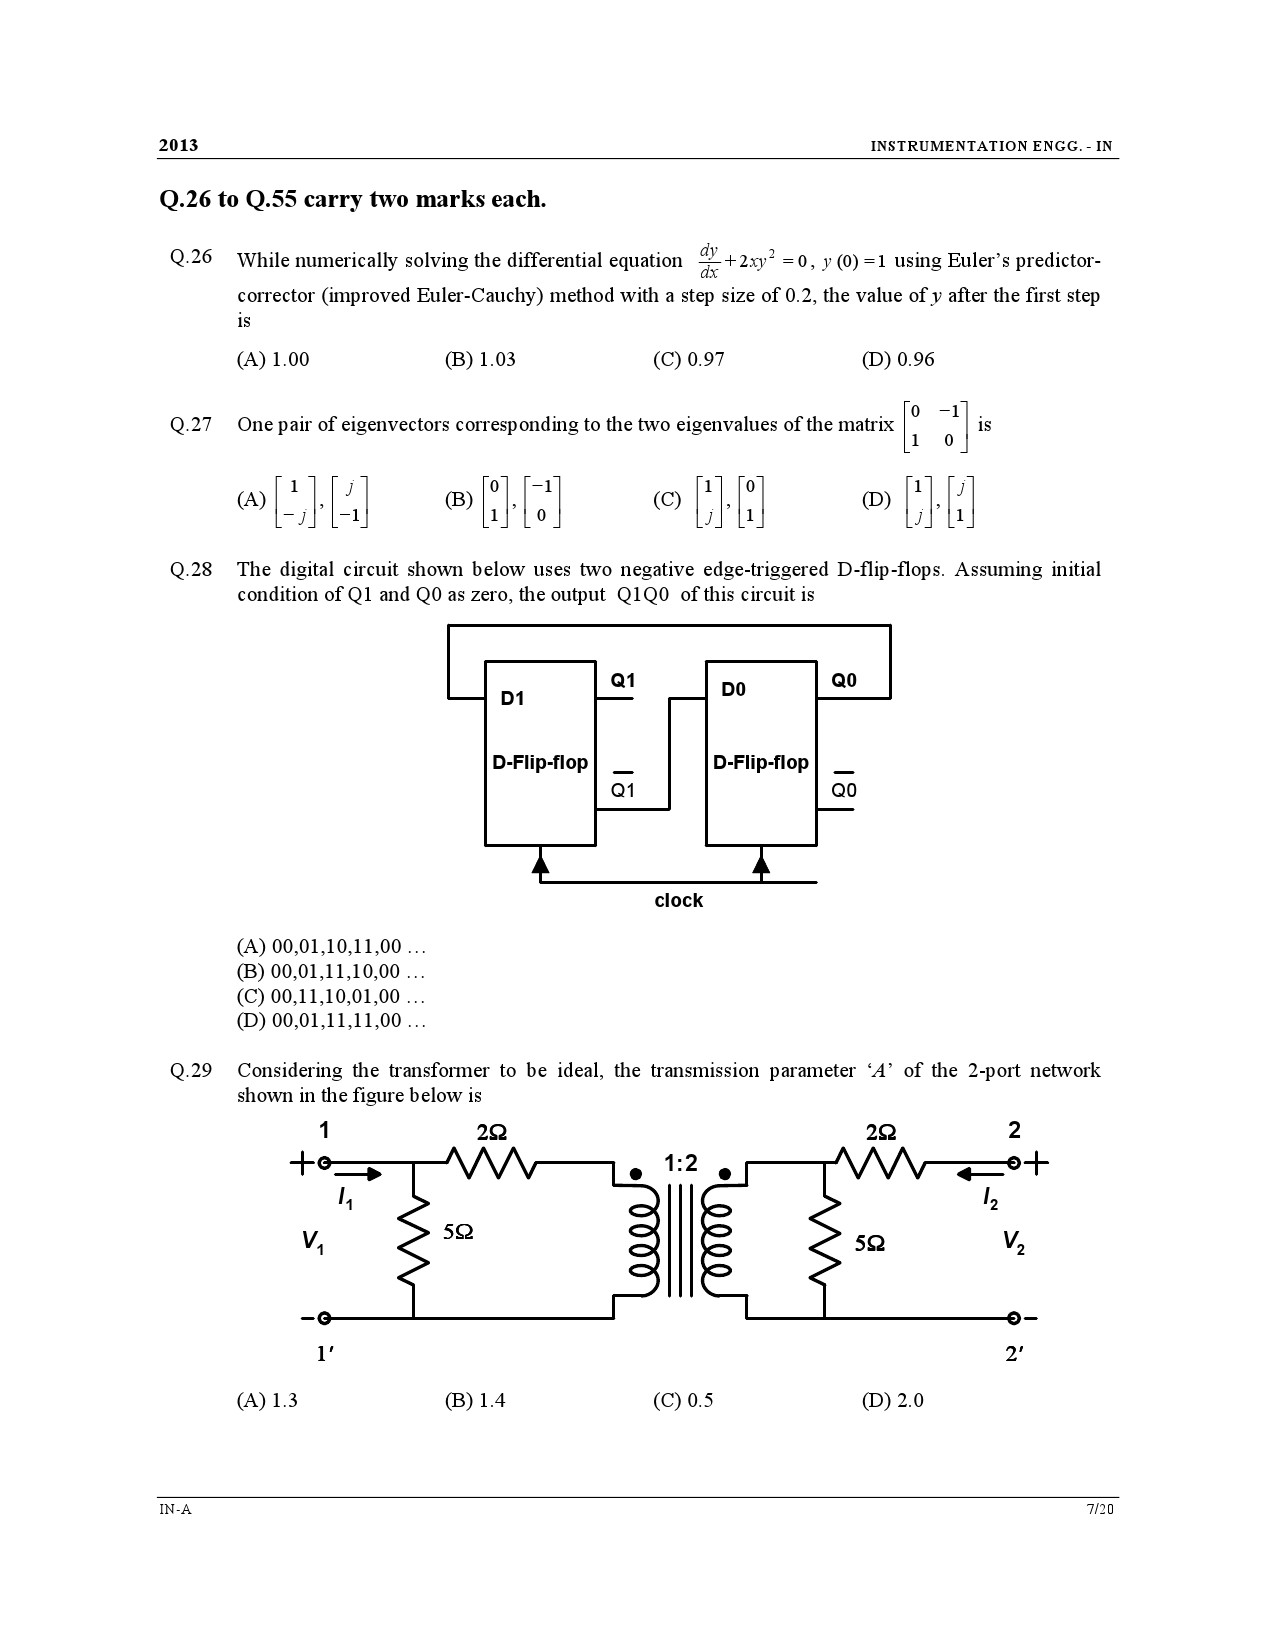 GATE Exam Question Paper 2013 Instrumentation Engineering 7